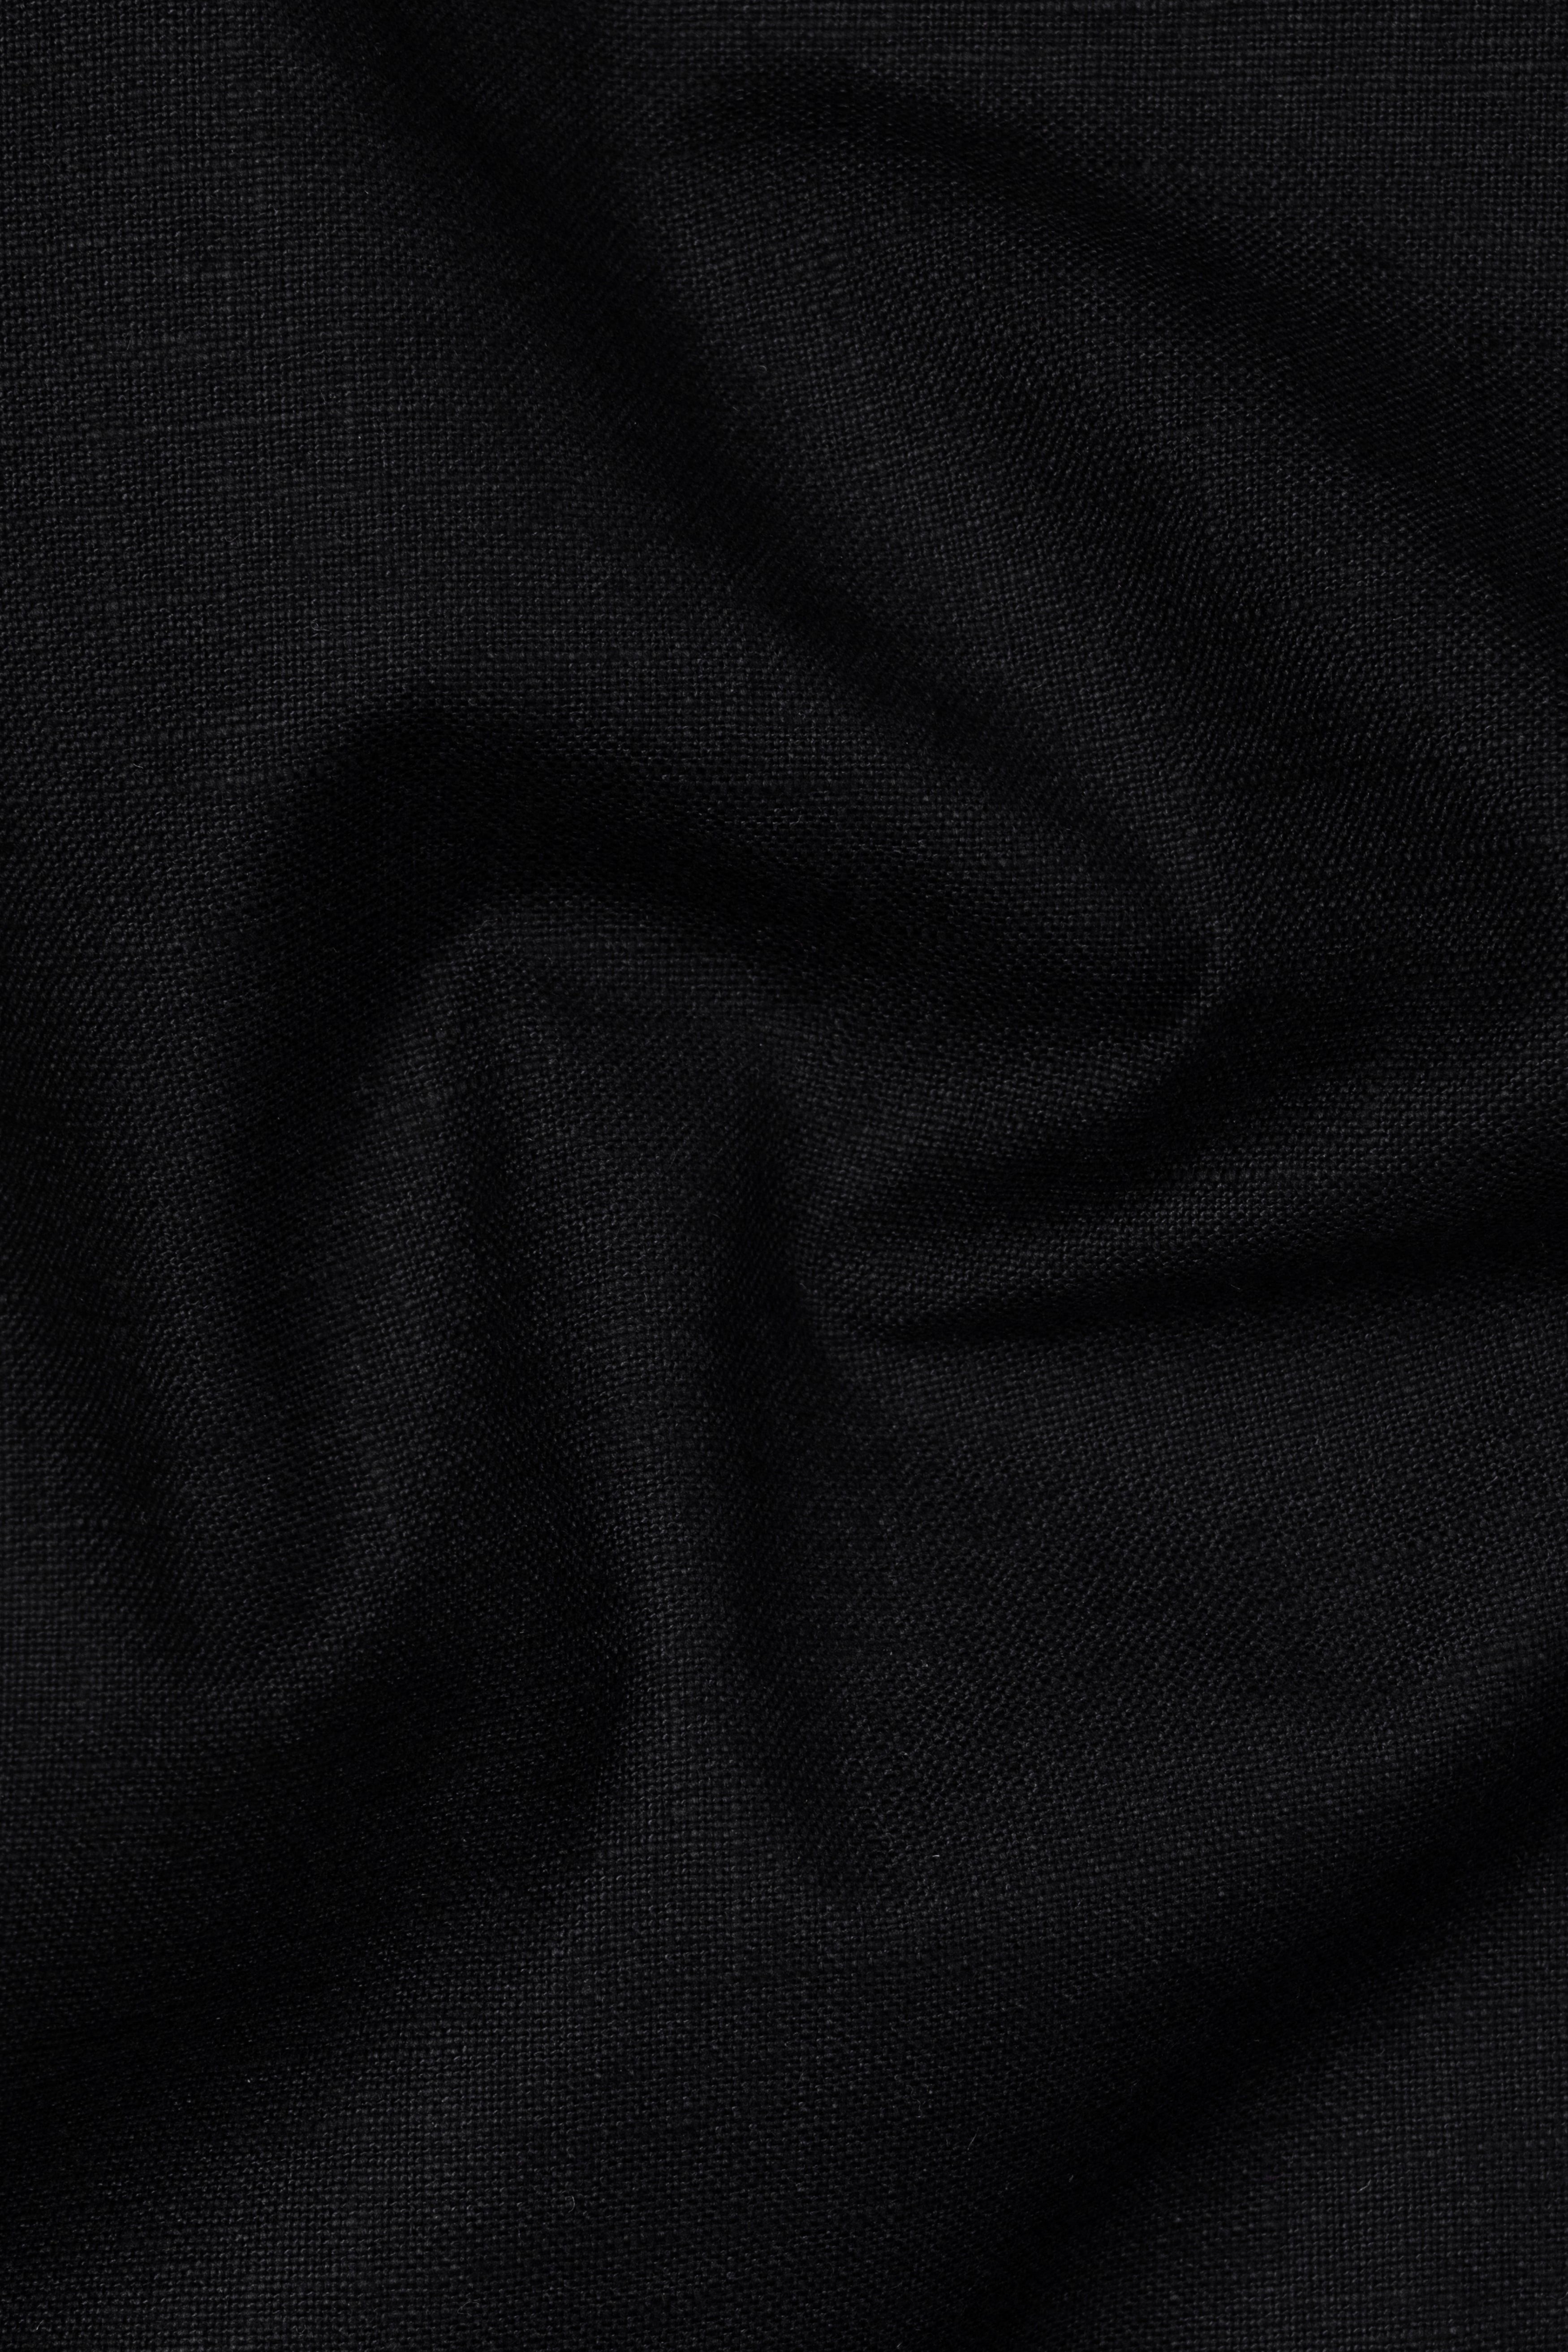 Jade Black Solid Tweed Blazer